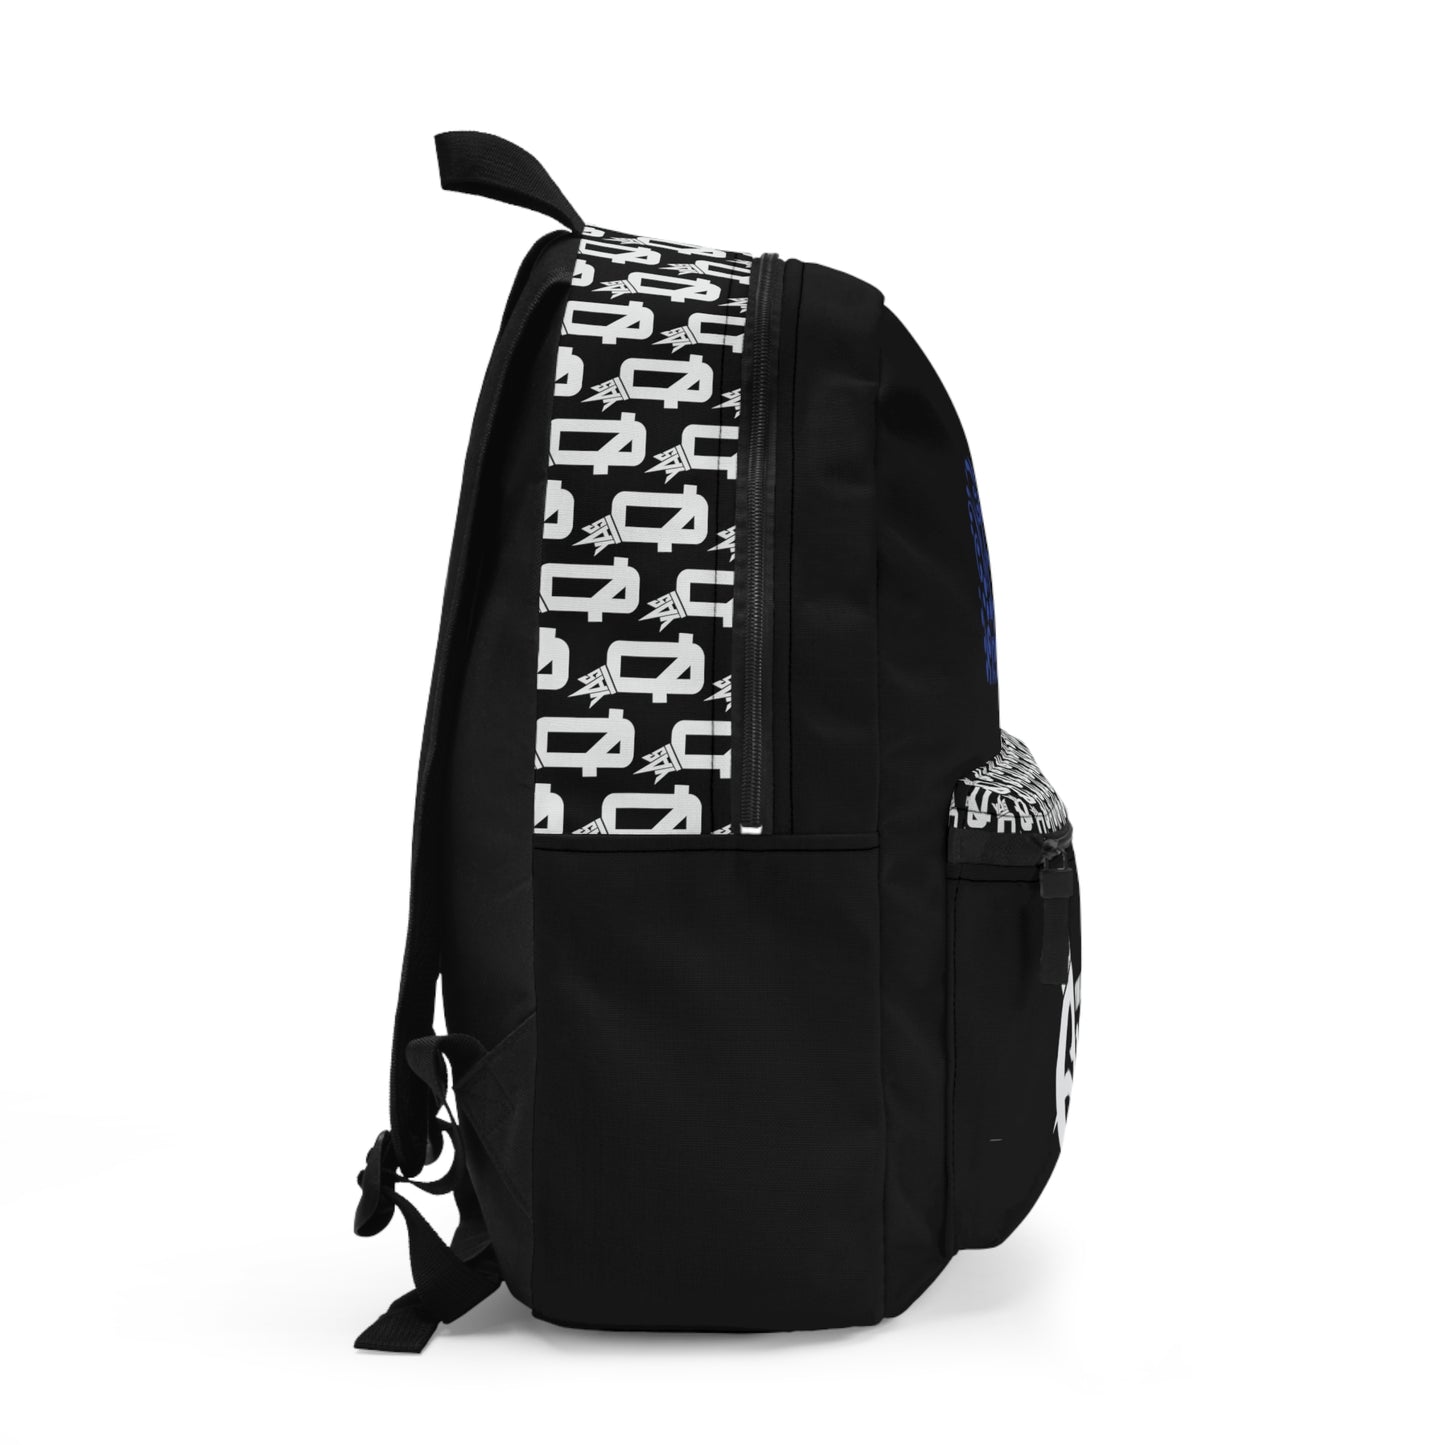 Regal Pride: The Proud Queen (black) Backpack